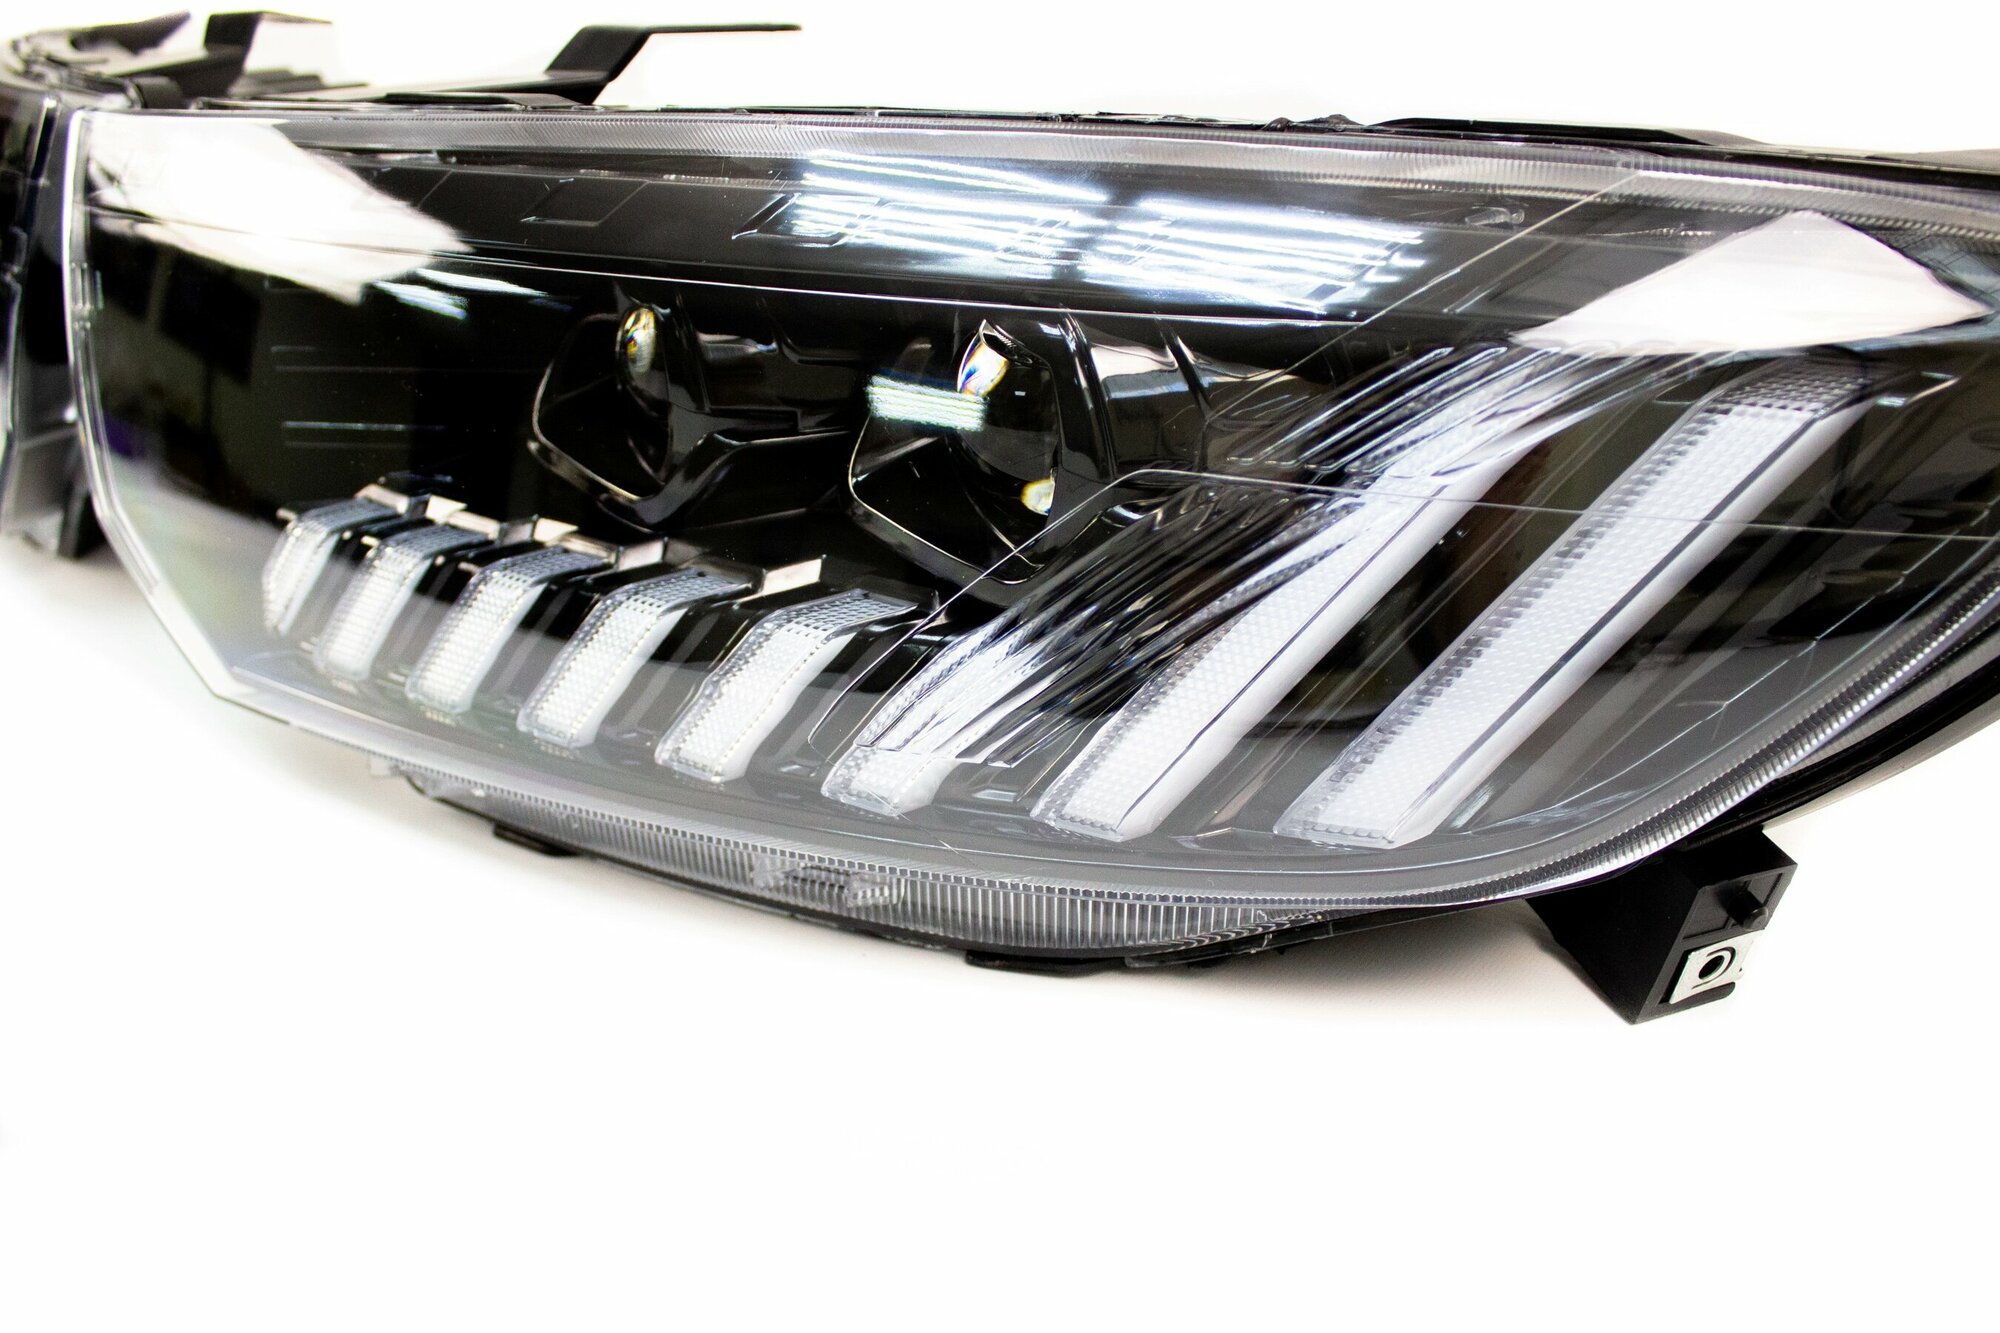 Фары Тюнинг для Лада Веста стиль AMG 2 линзы на фаре Bi-LED Бегущий поворотник